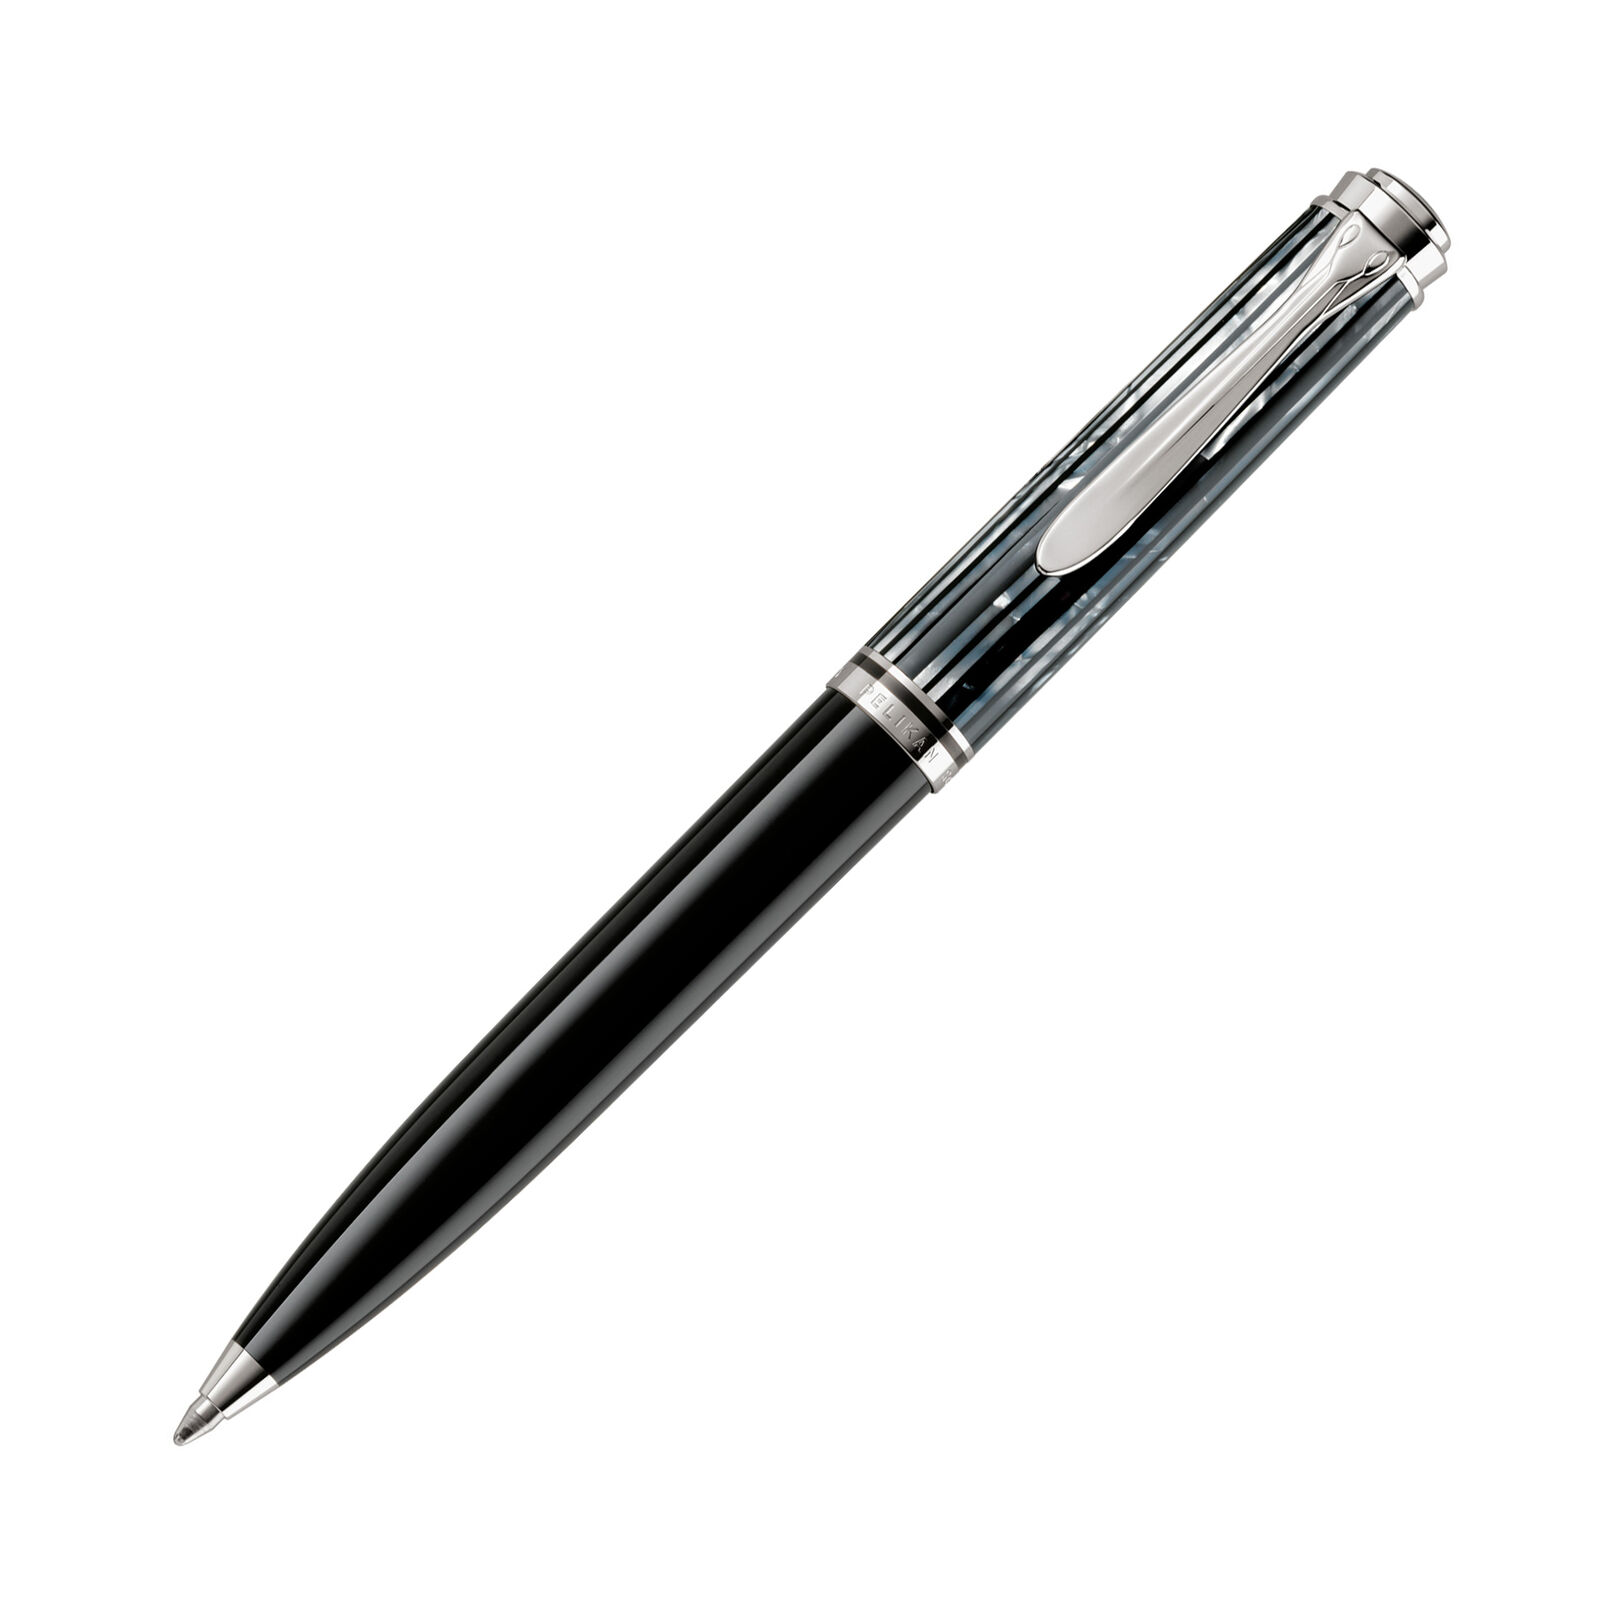 Pelikan Souveran K605 Ballpoint Pen in Tortoiseshell-Black -NEW in Box